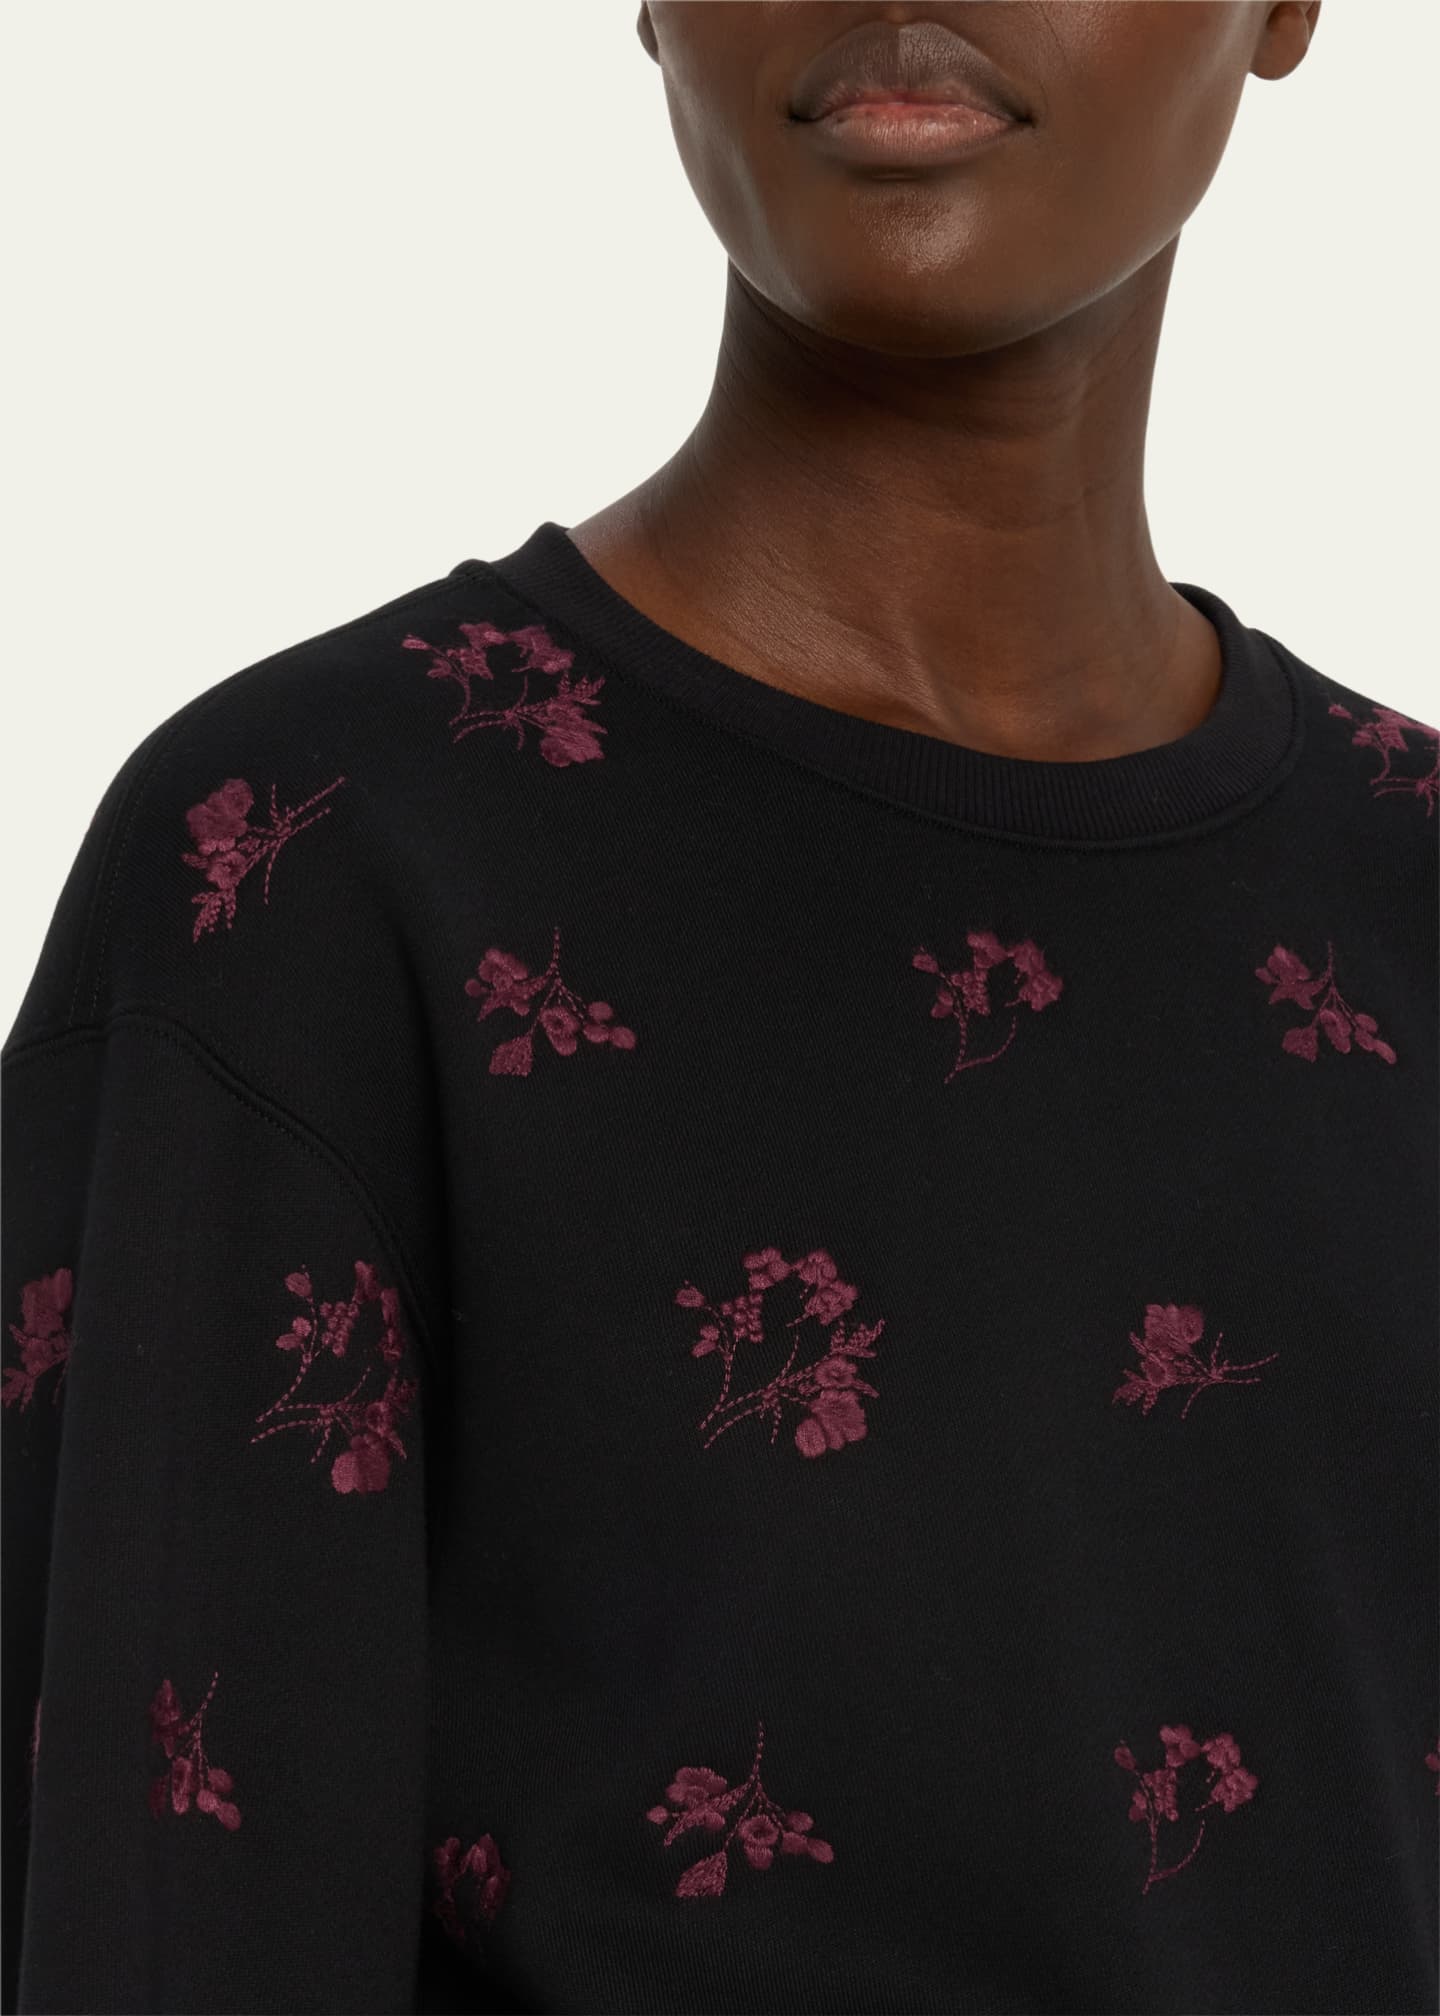 Jason Wu Floral-Embroidered Crewneck Sweatshirt - Bergdorf Goodman